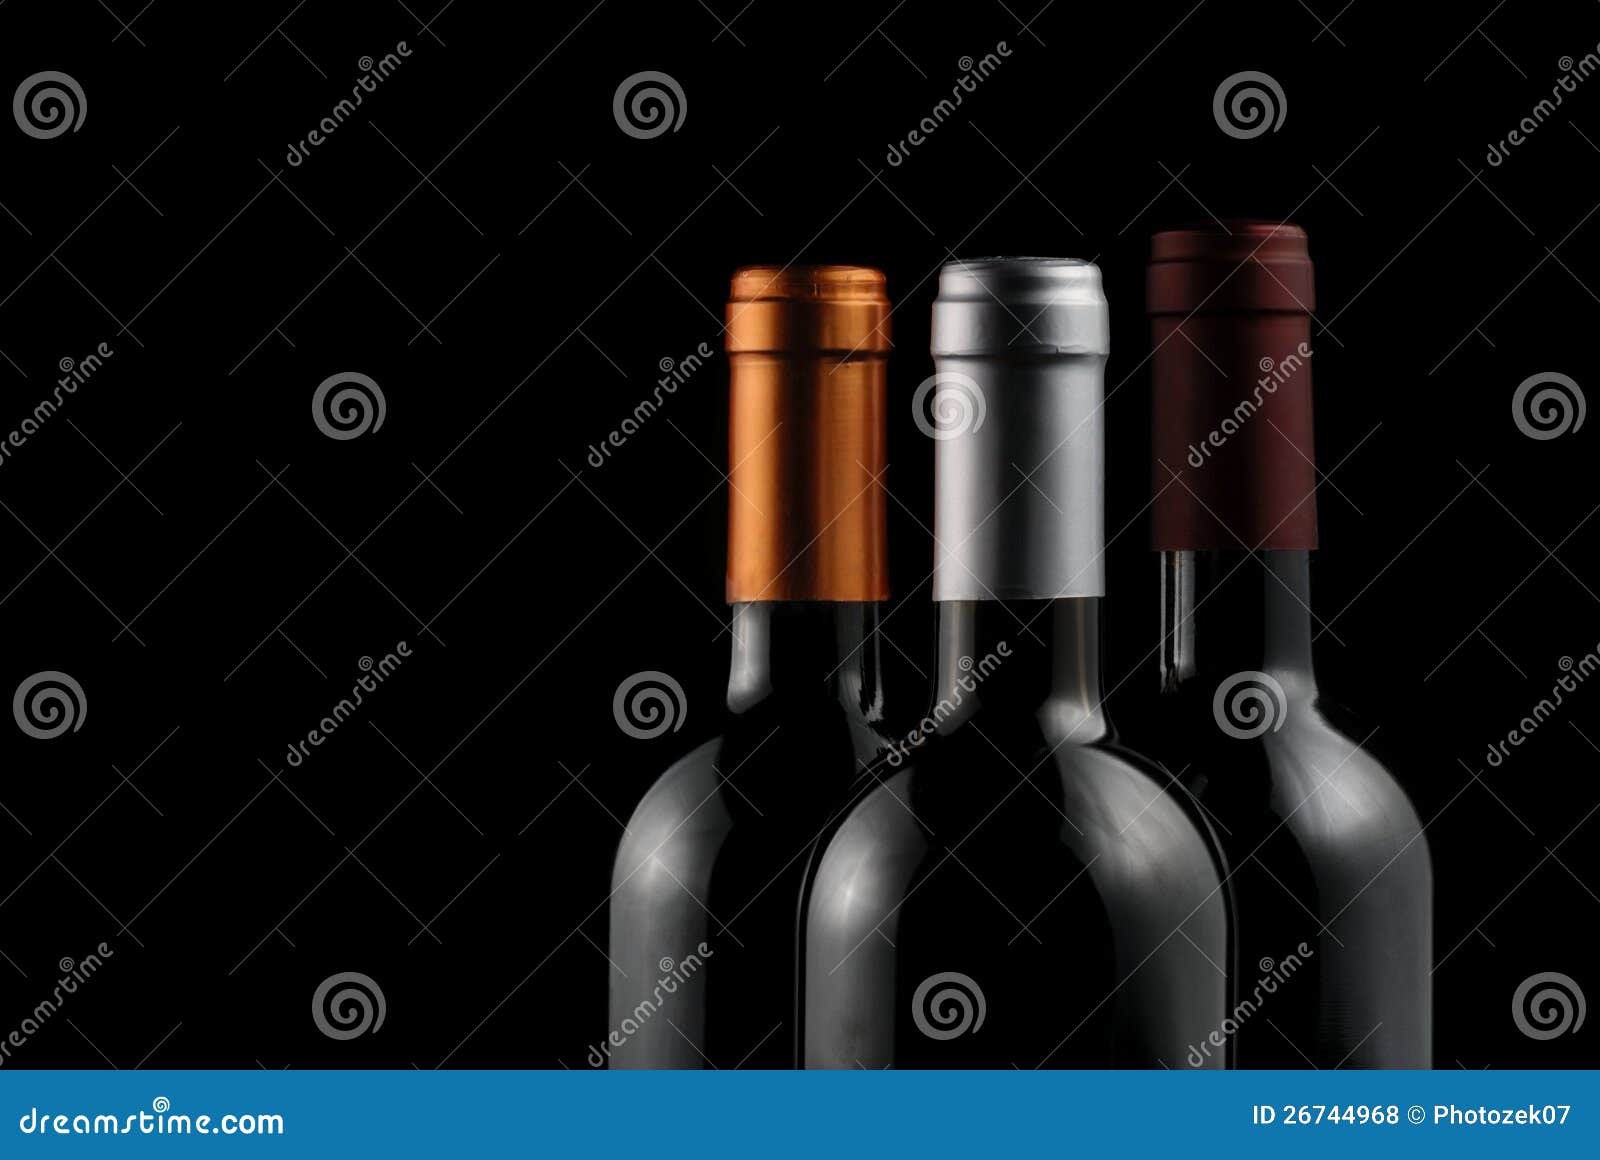 Ciérrese para arriba de tres botellas de vino sobre fondo negro